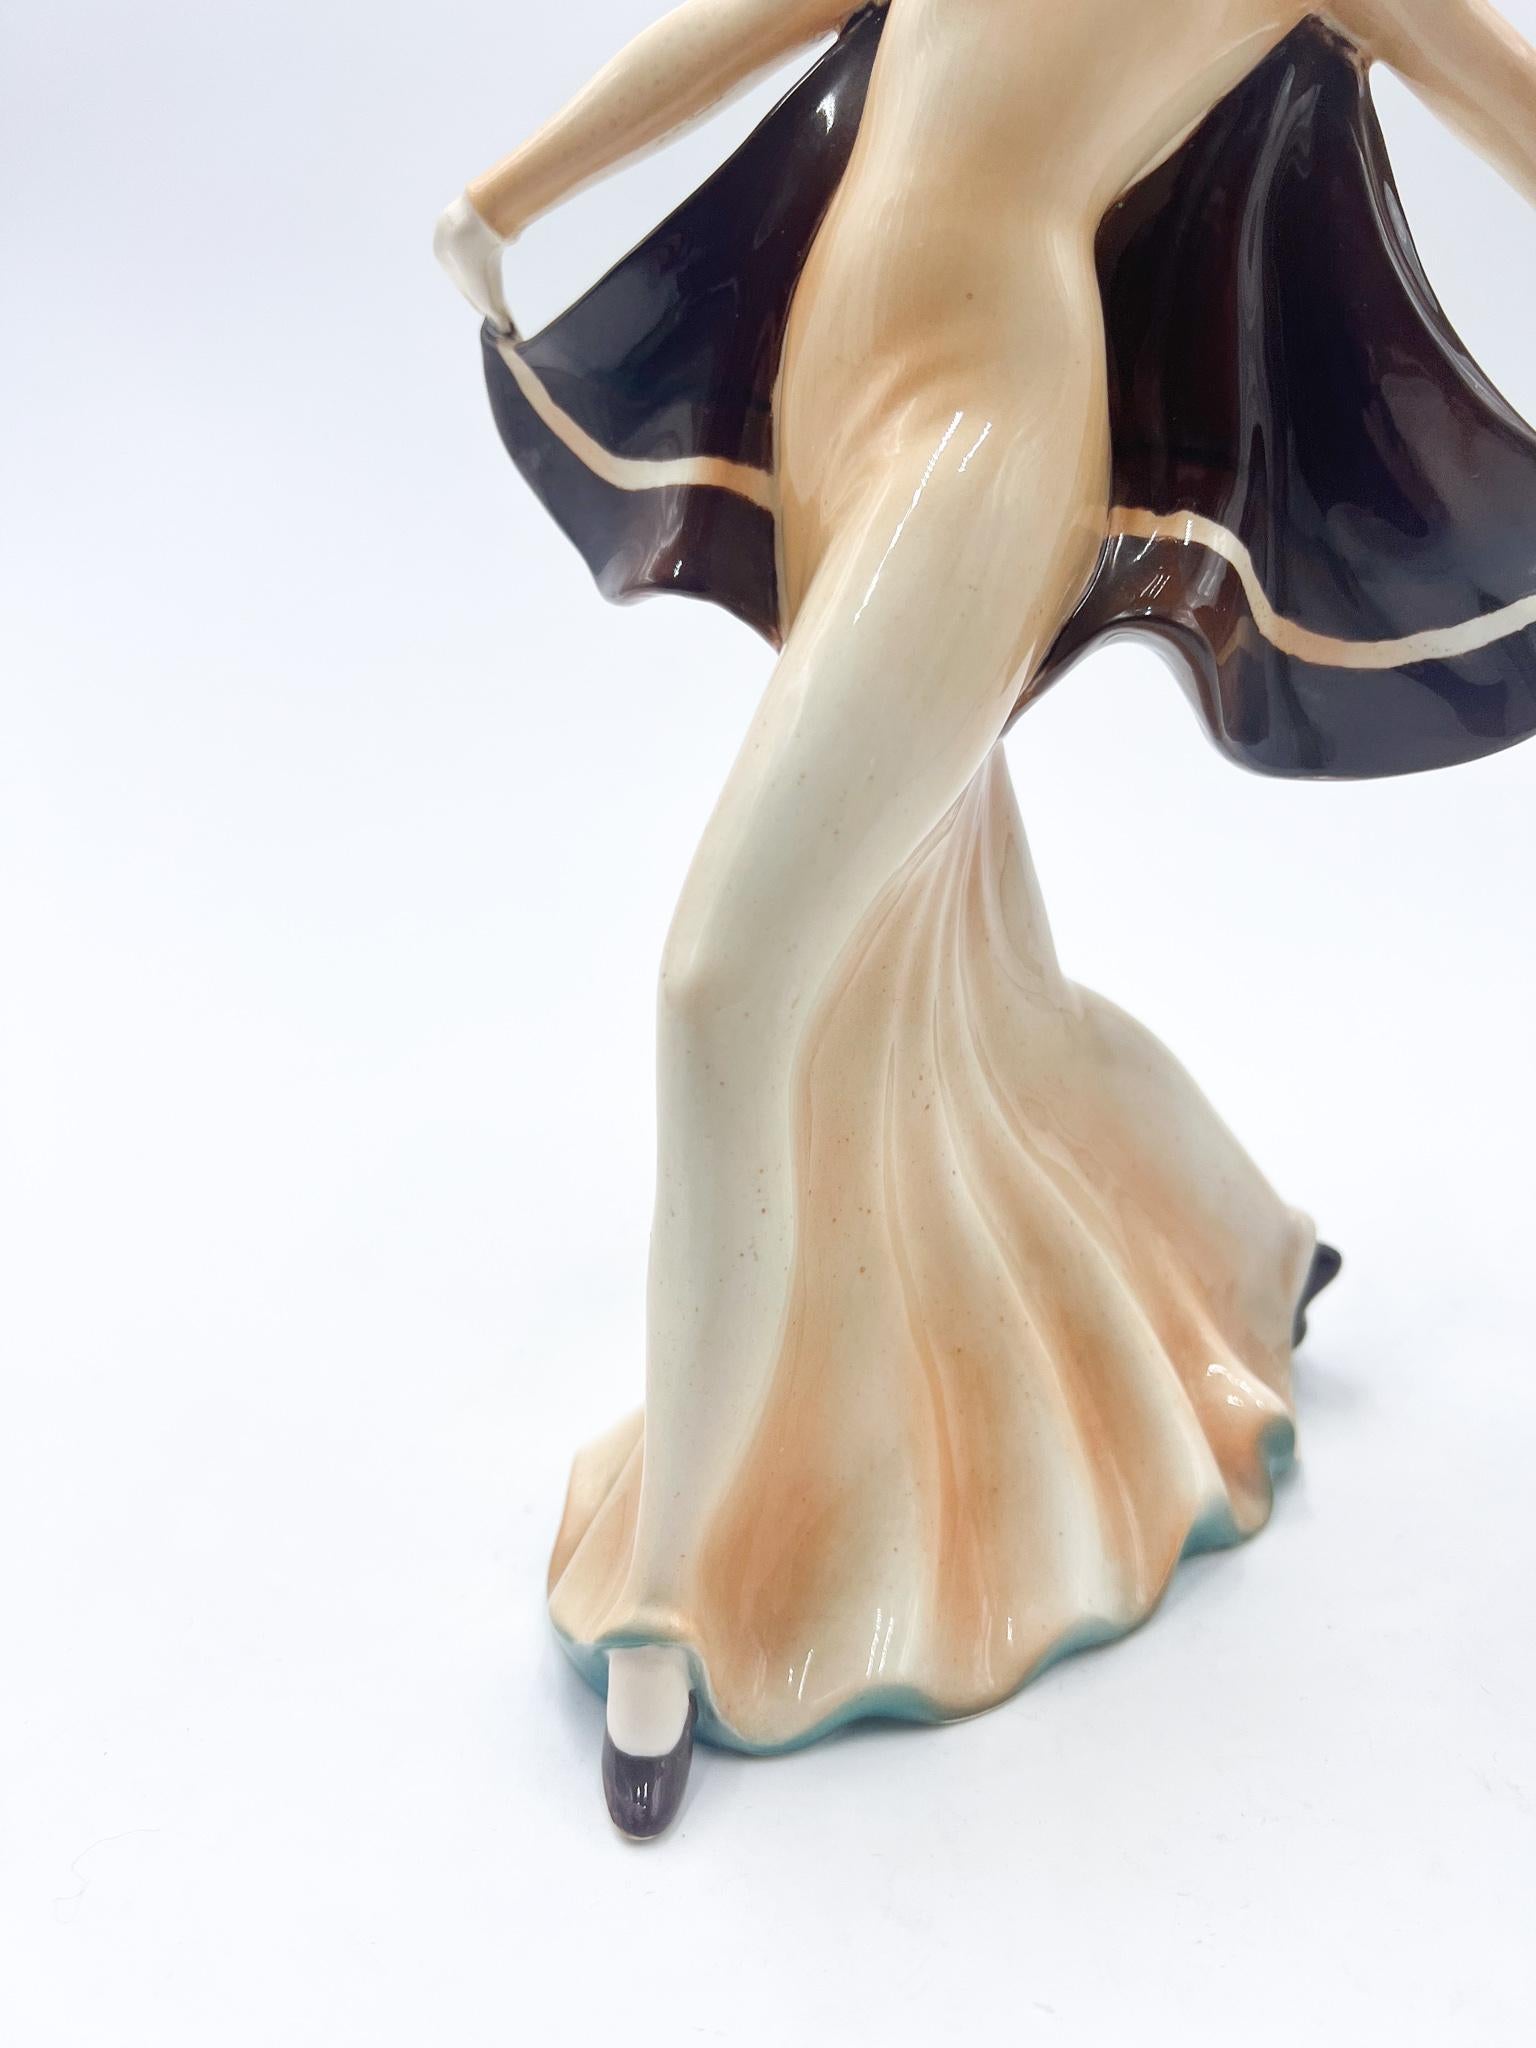 Art Deco Ceramic Figurine of a Decò Ballerina from the 1940s